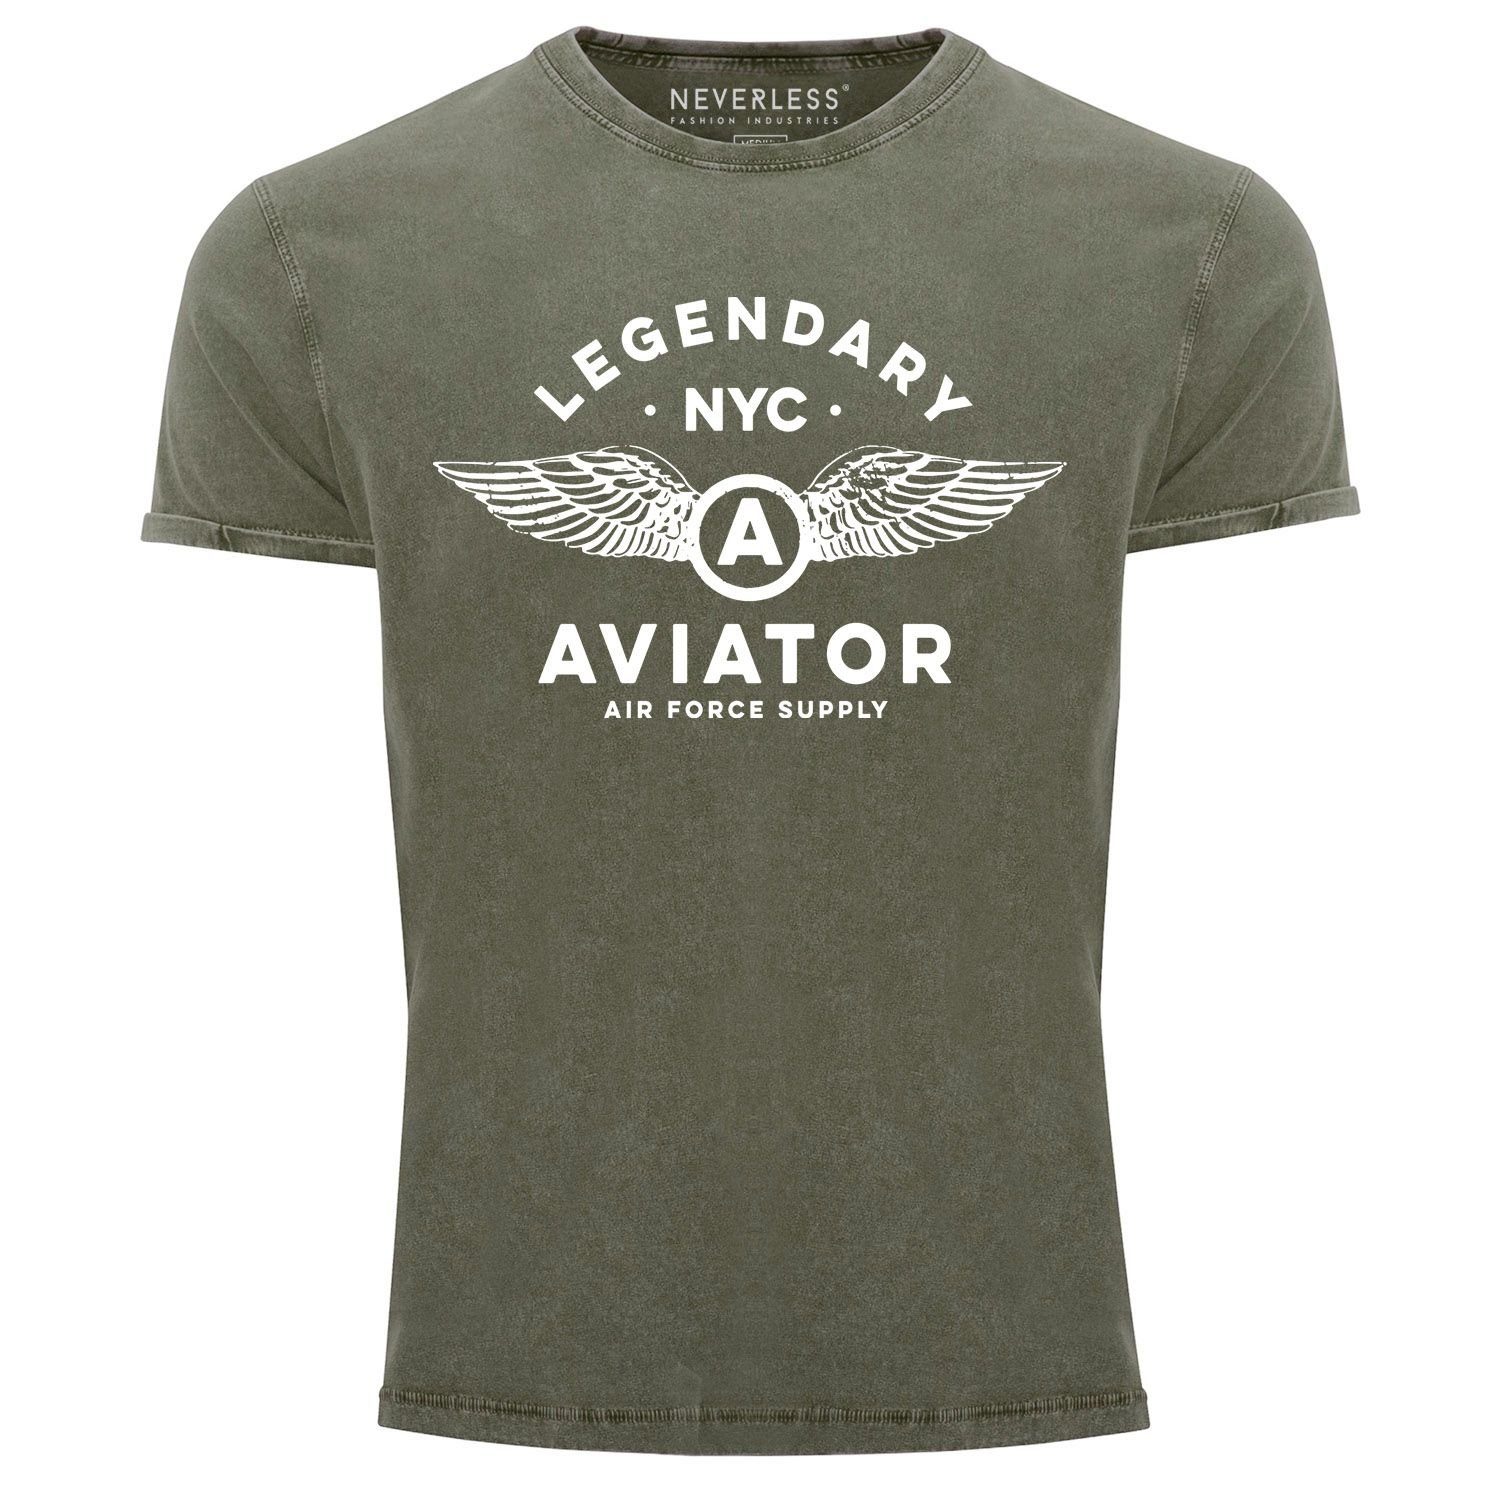 Neverless Print-Shirt Herren Vintage Shirt Legendary NYC Aviator Air Force Luftwaffe Flügel Printshirt Used Look Slim Fit Neverless® mit Print oliv